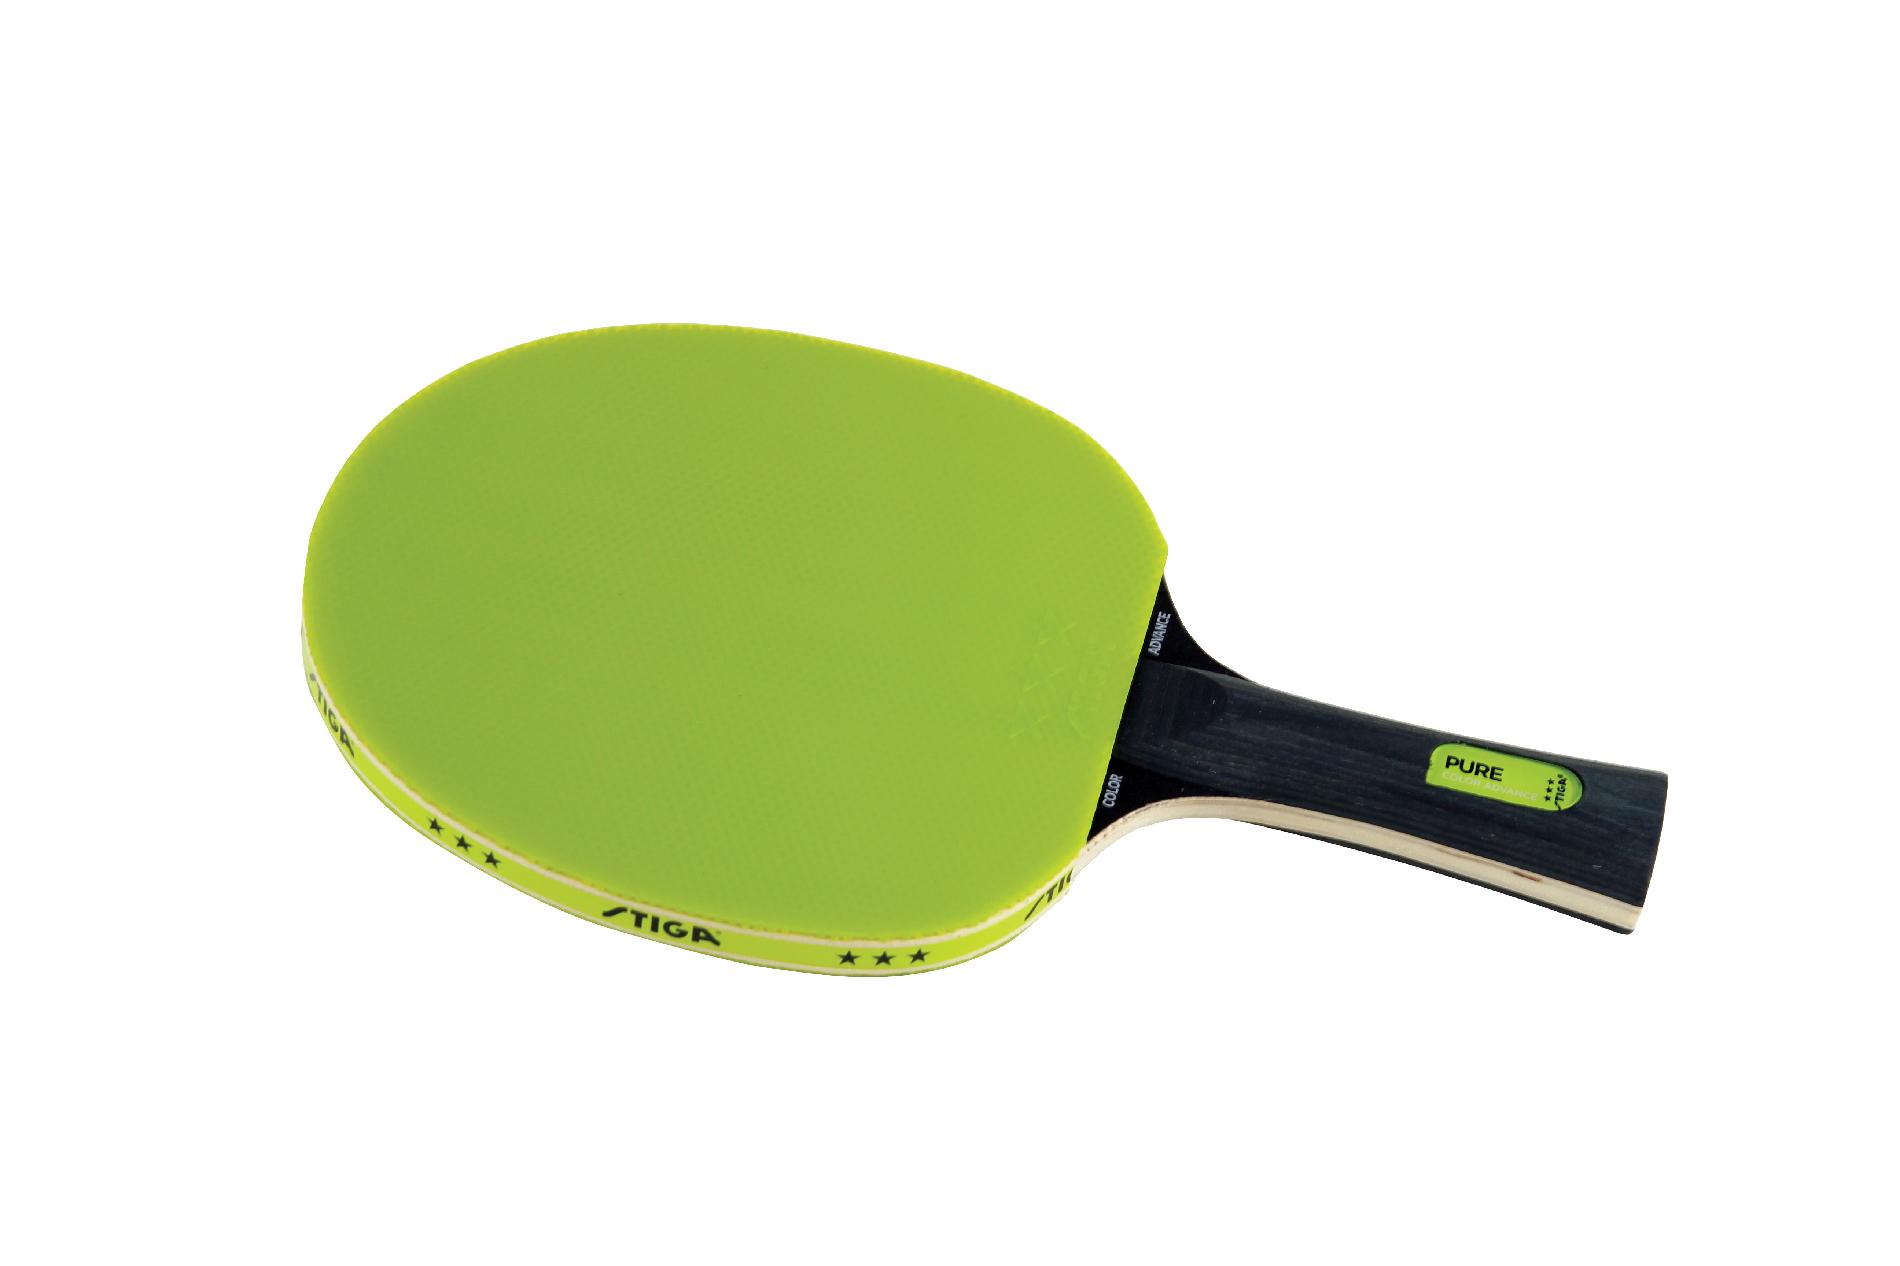 Stiga Table Tennis Racket - Pure Green